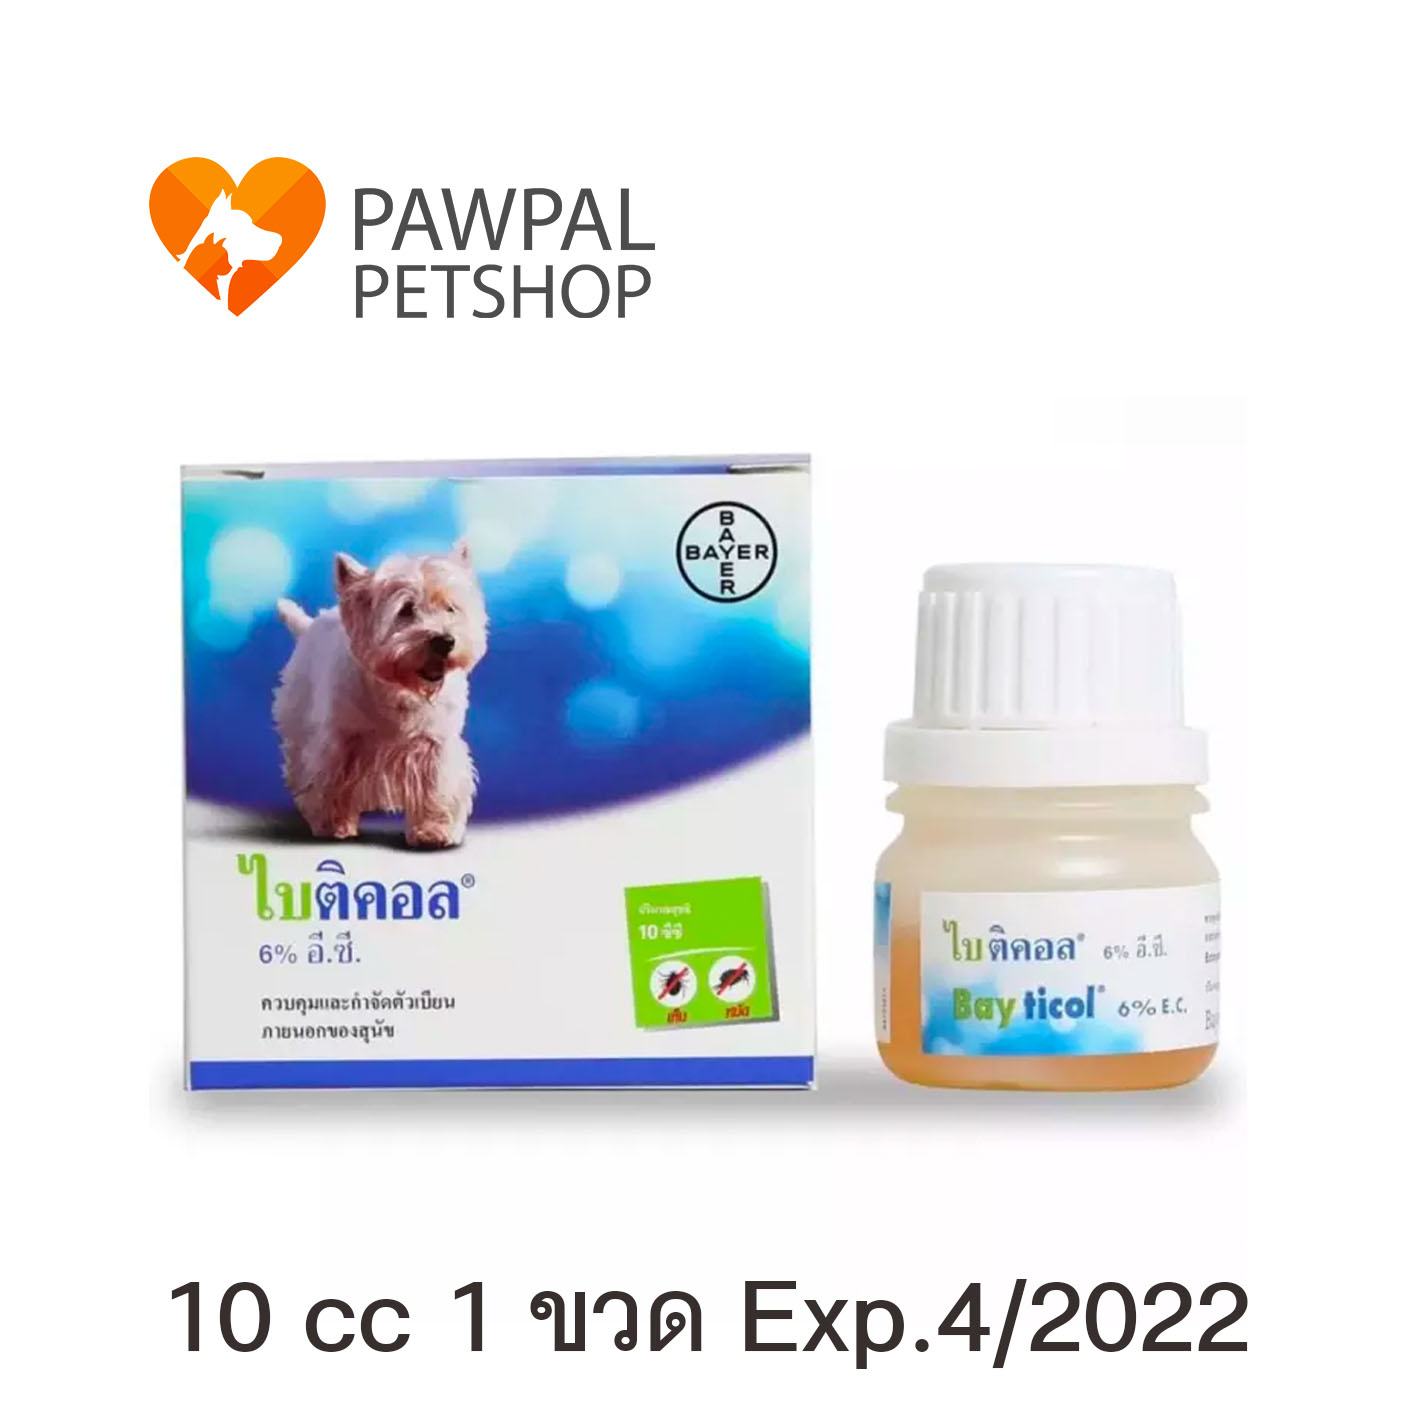 Bayticol 6% E.C. 10 cc ไบติคอล 6% อี.ซี. Bayer Exp.4/2022 น้ำยาควบคุม กำจัดเห็บหมัด สำหรับ สุนัข ใช้ภายนอก 10 ml tick flea control for dog (1 ขวด)